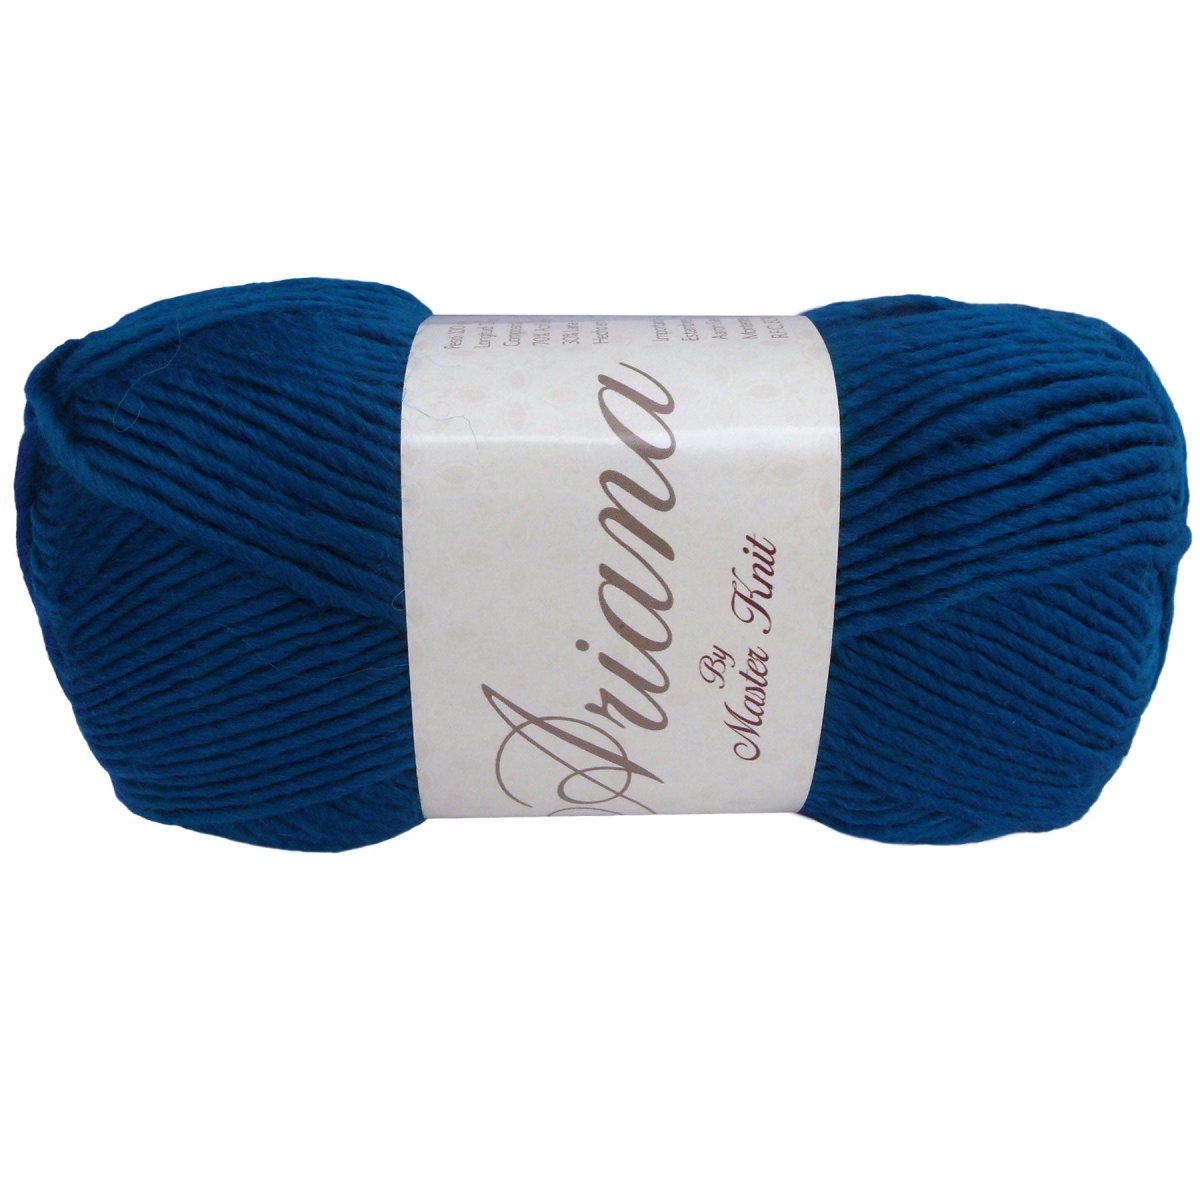 ARIANA - Aran - Crochetstores9510-144